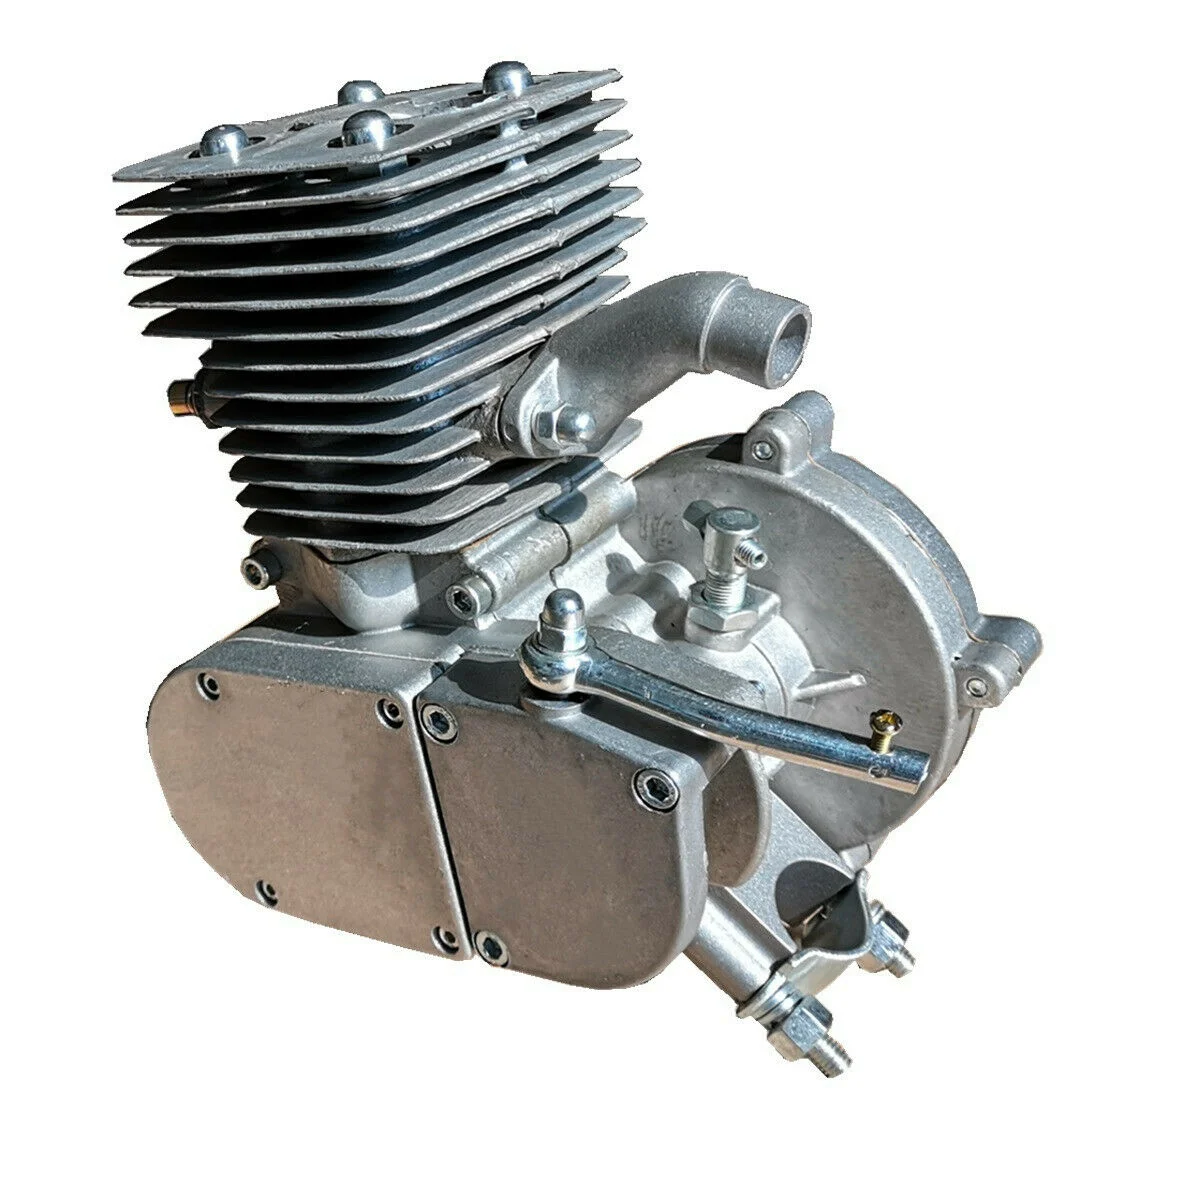 Samger 50/80/100CC Fahrrad Benzin Motor Teil 2-Stroke Gas Engine Kopf Set  Für DIY Elektrische fahrrad Mountainbike Gas Motor